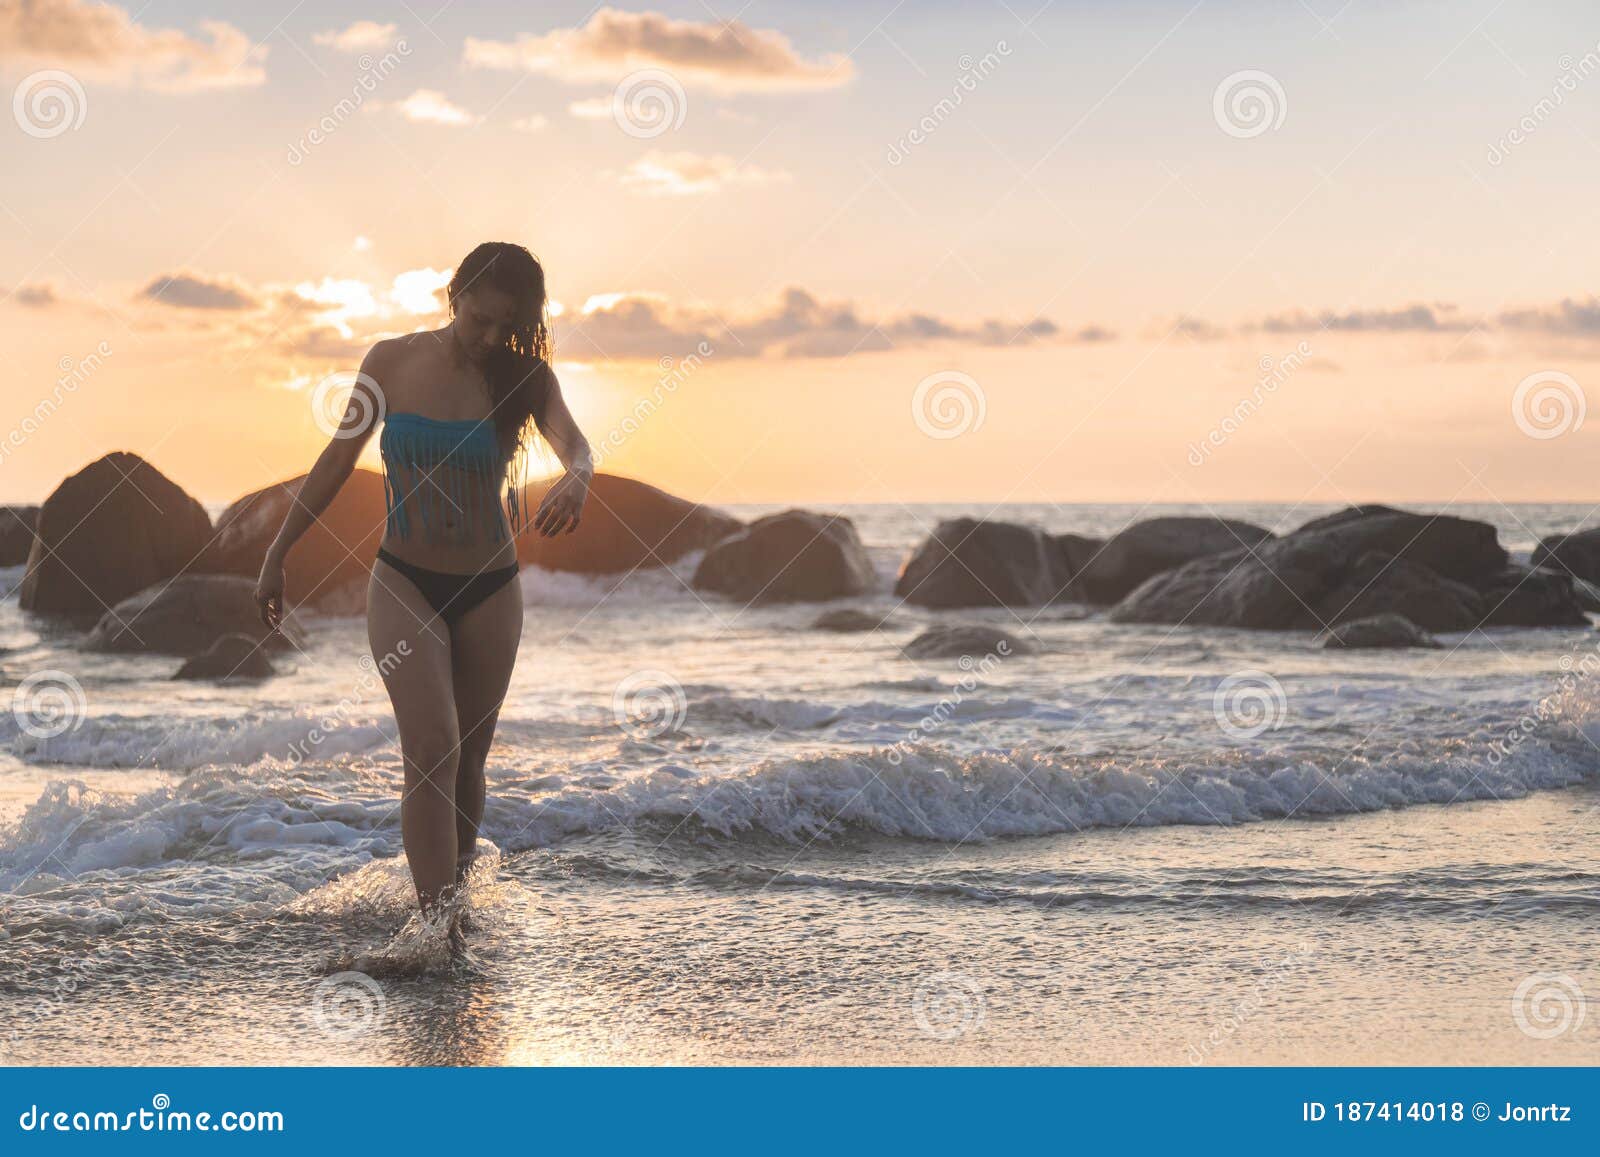 Surfer girl workout